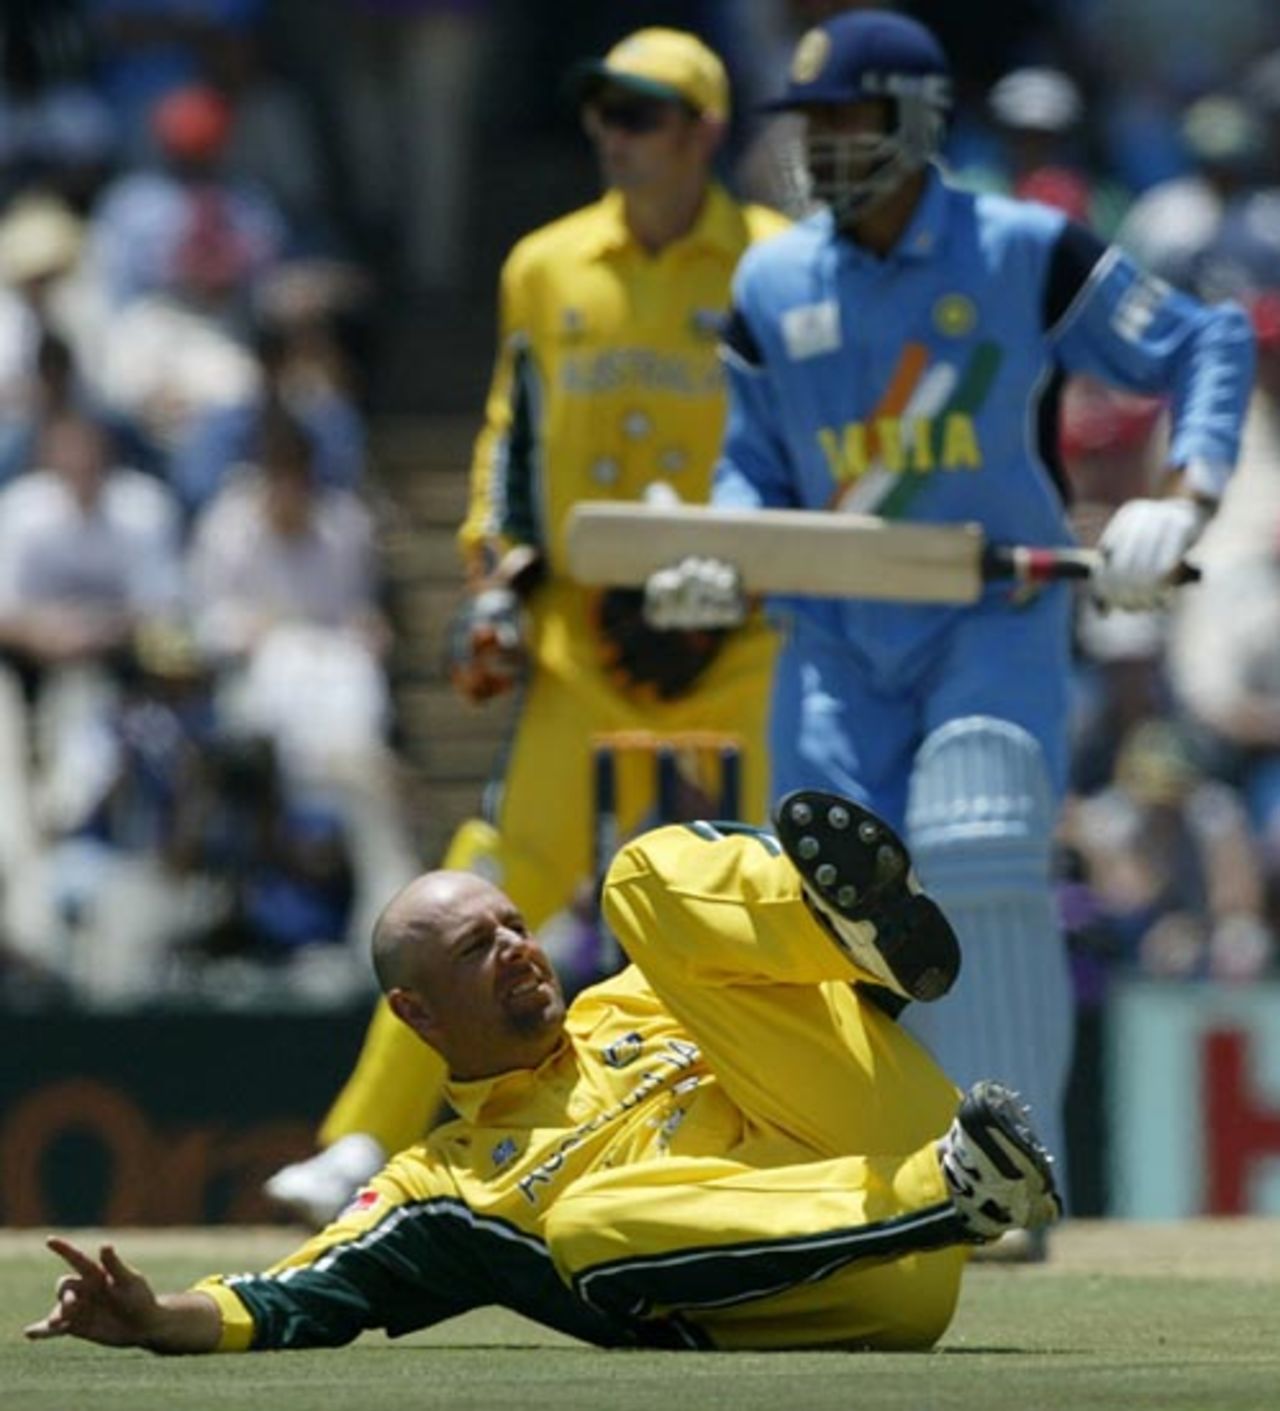 World Cup, 2003 - Australia v India at Centurion, 15 February 2003